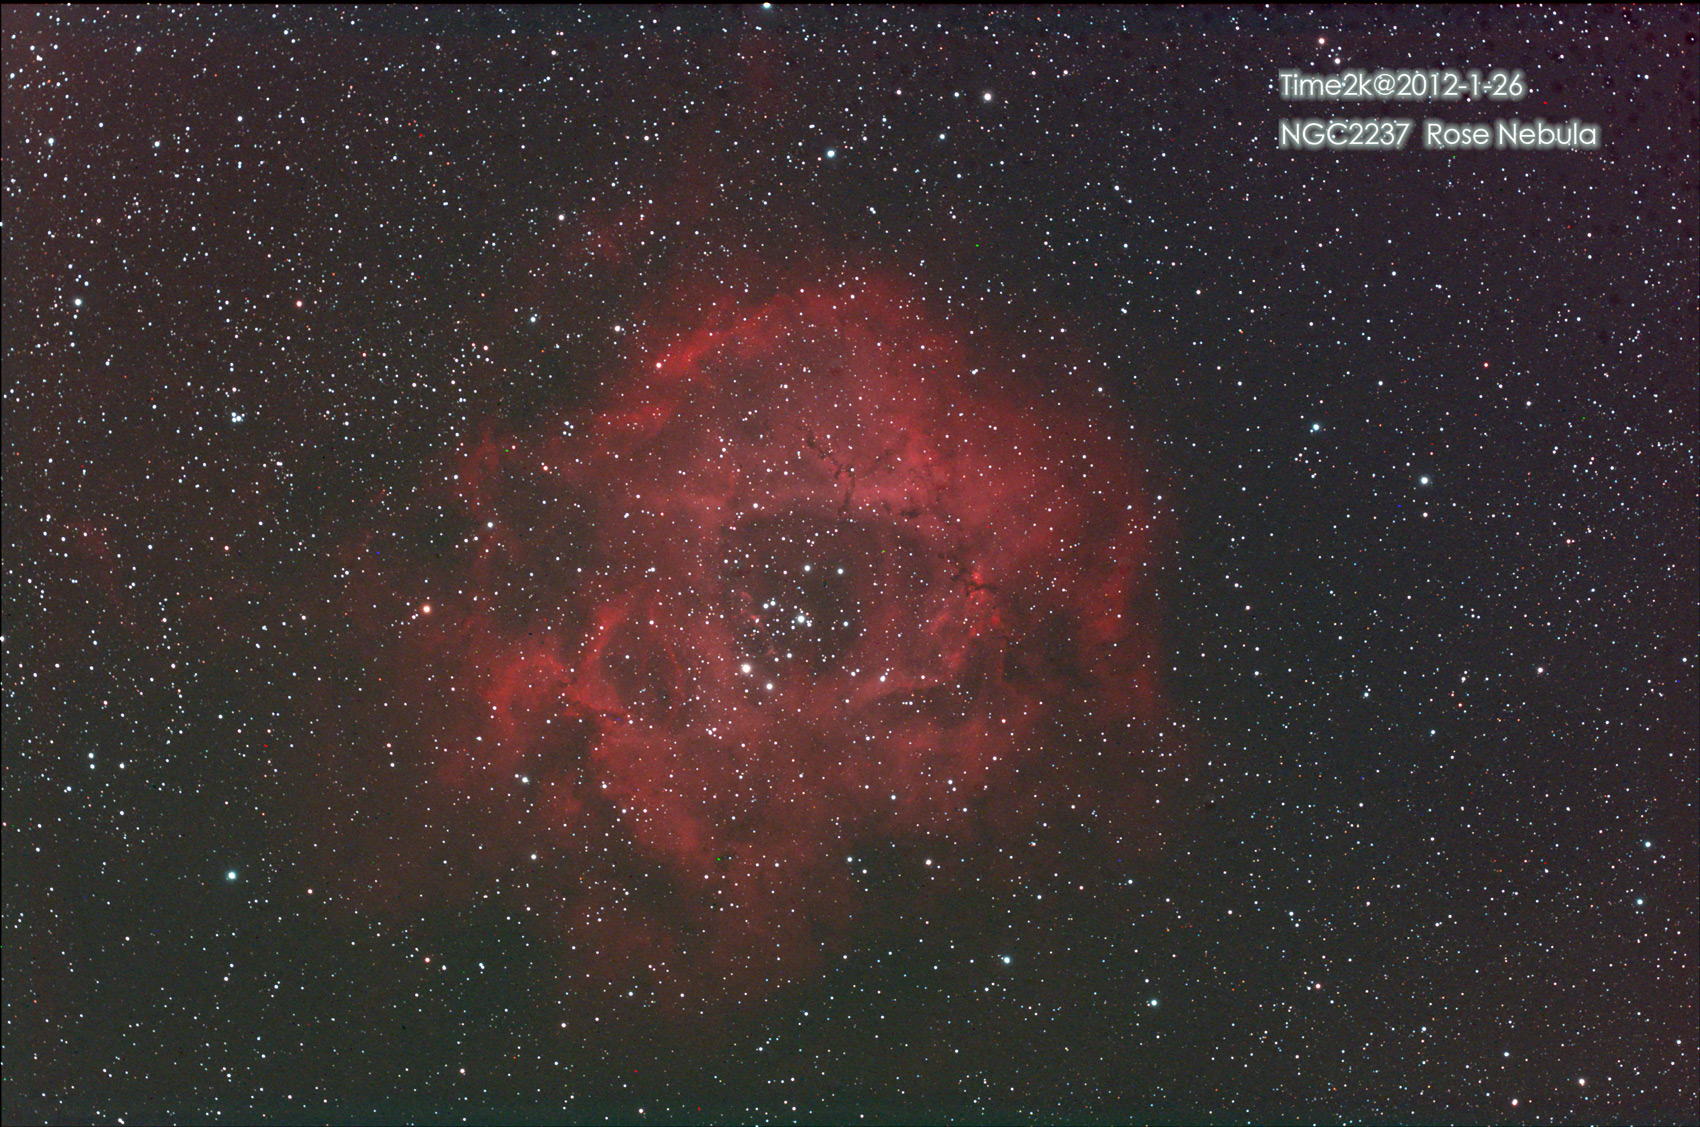 NGC 2239图片